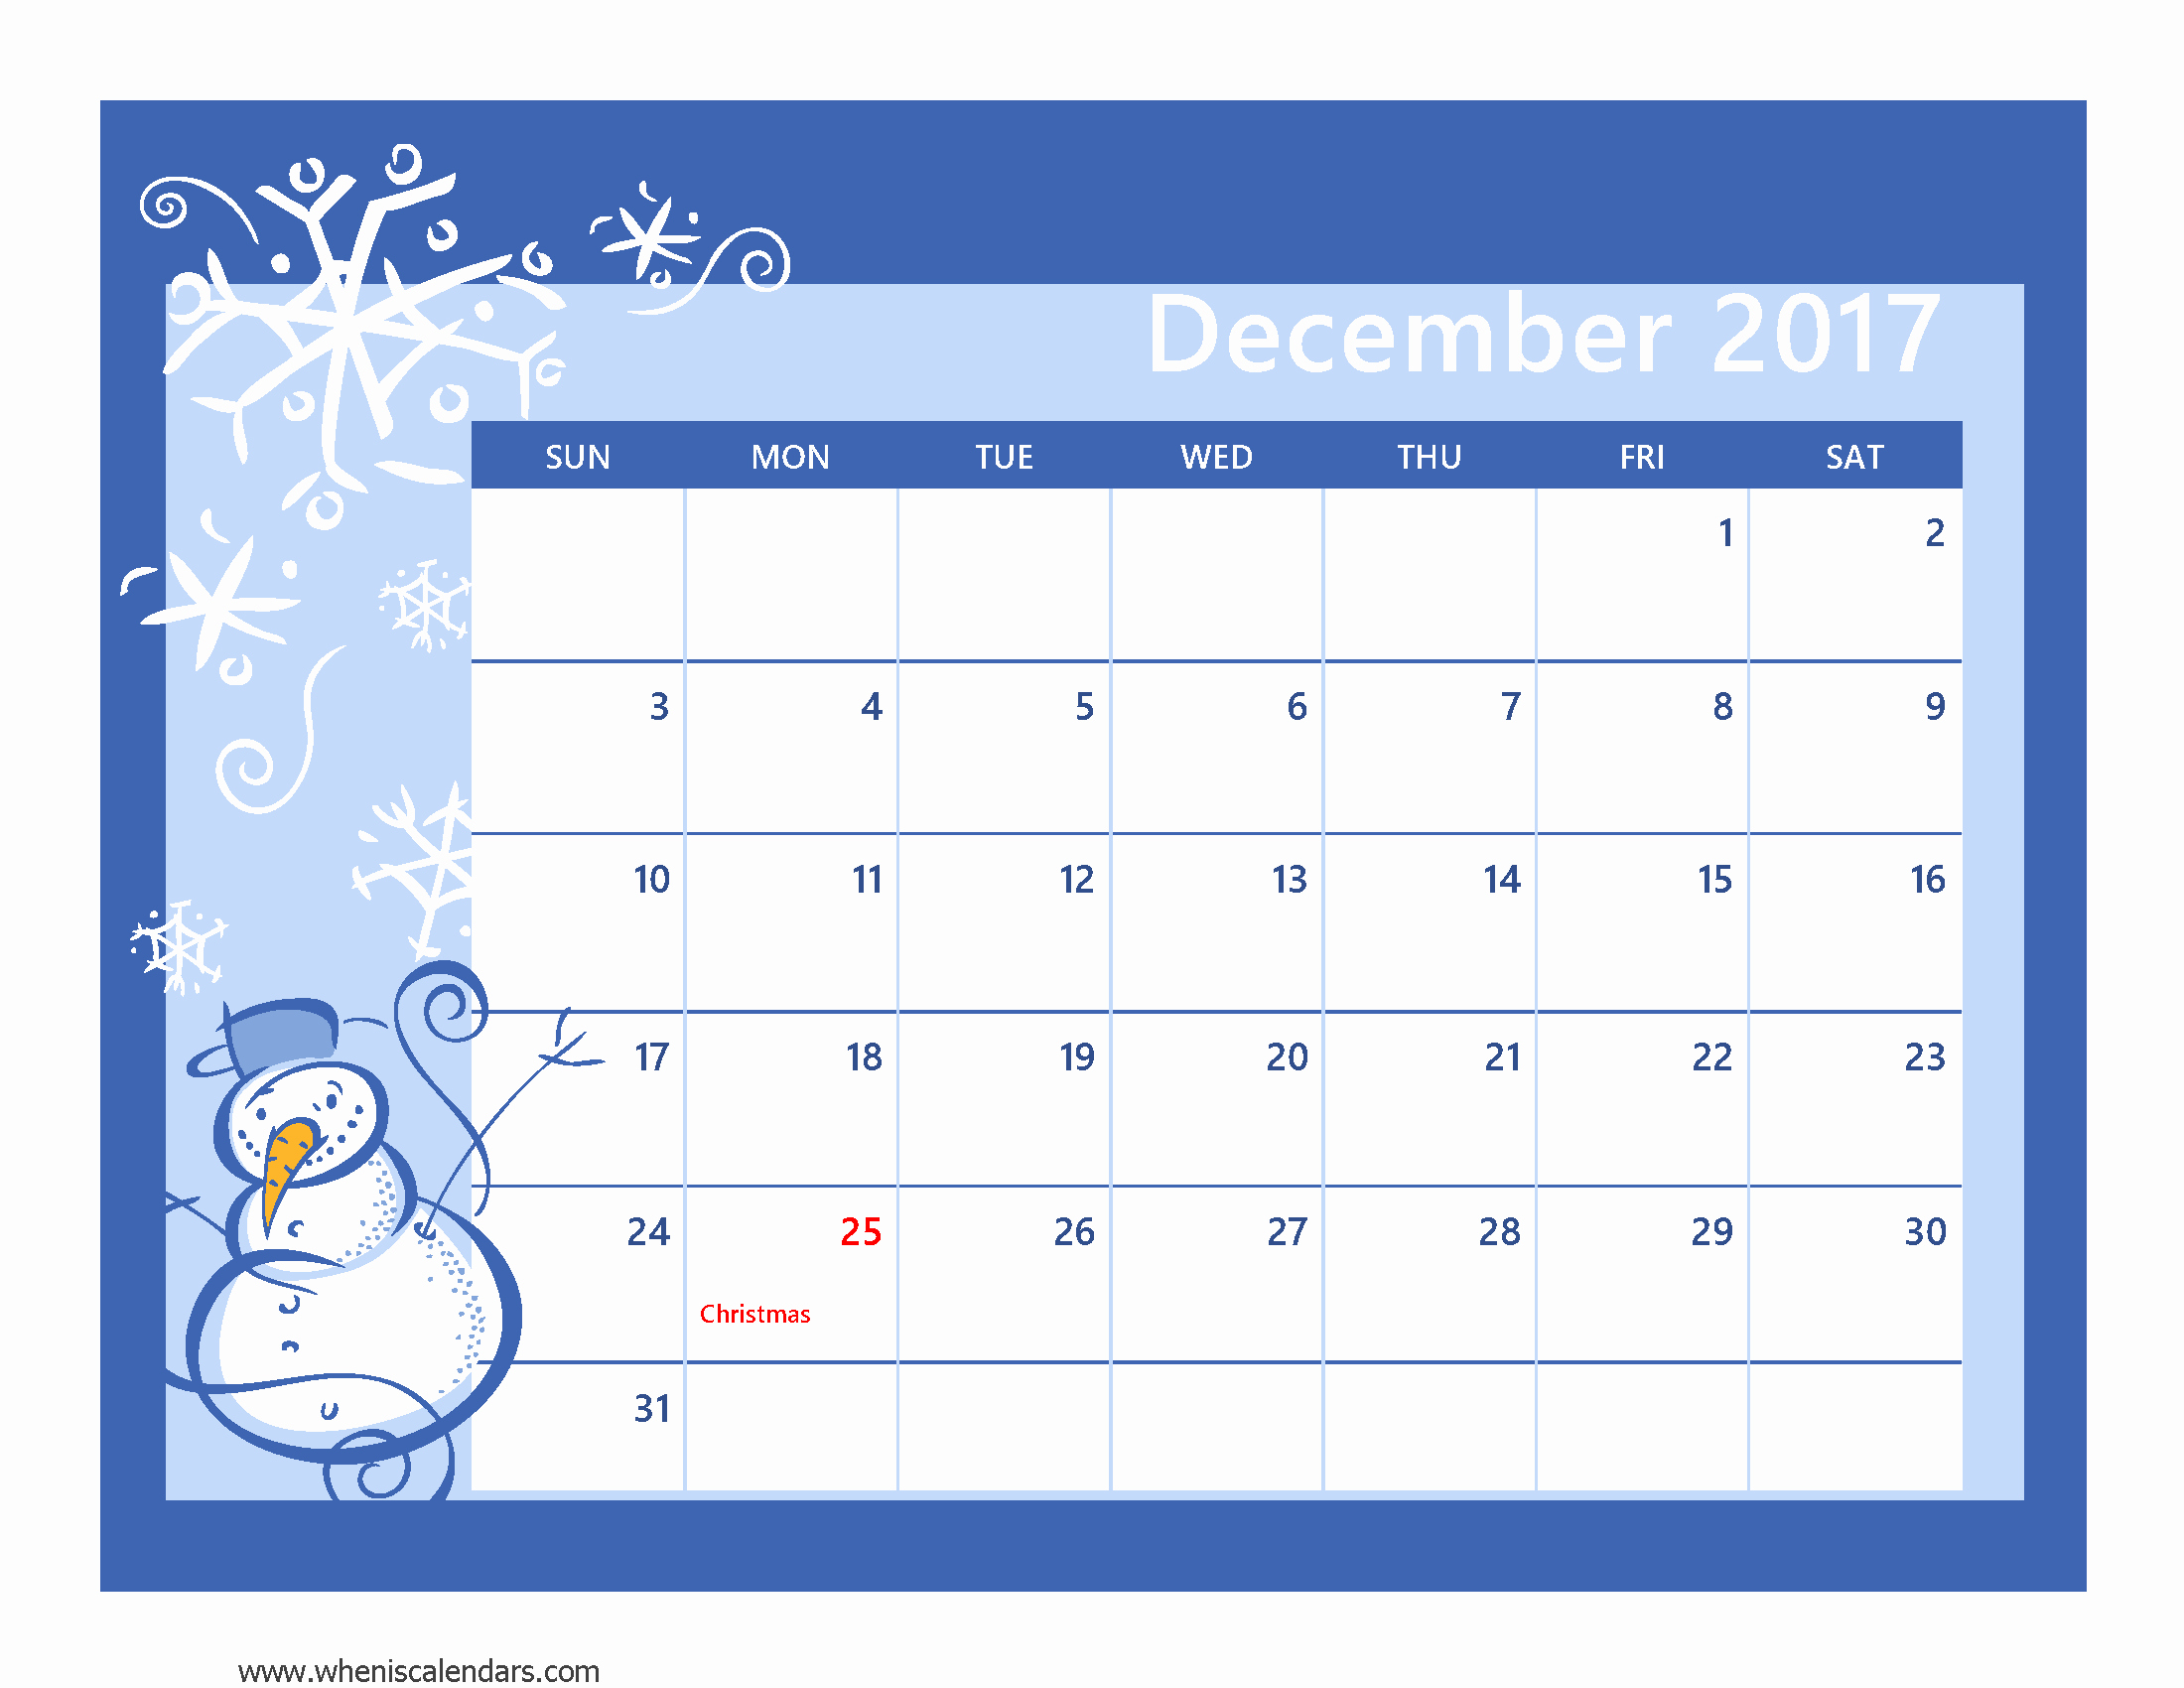 December 2017 Calendar Template Word Unique December 2017 Calendar Template